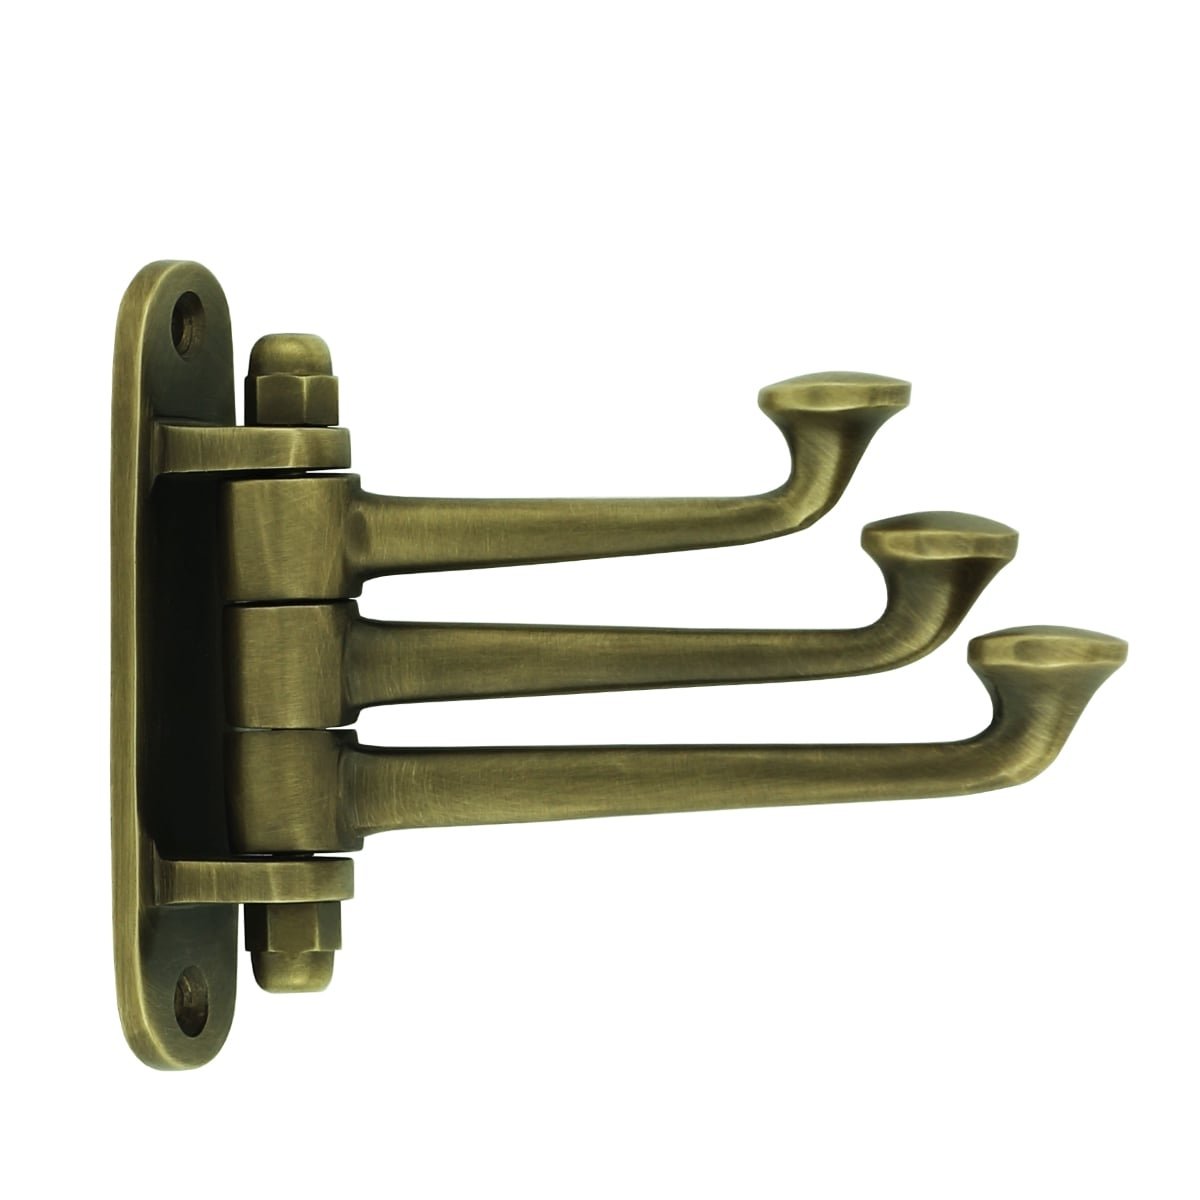 Clothes hook 3 arms brass Barntrup - 76 mm